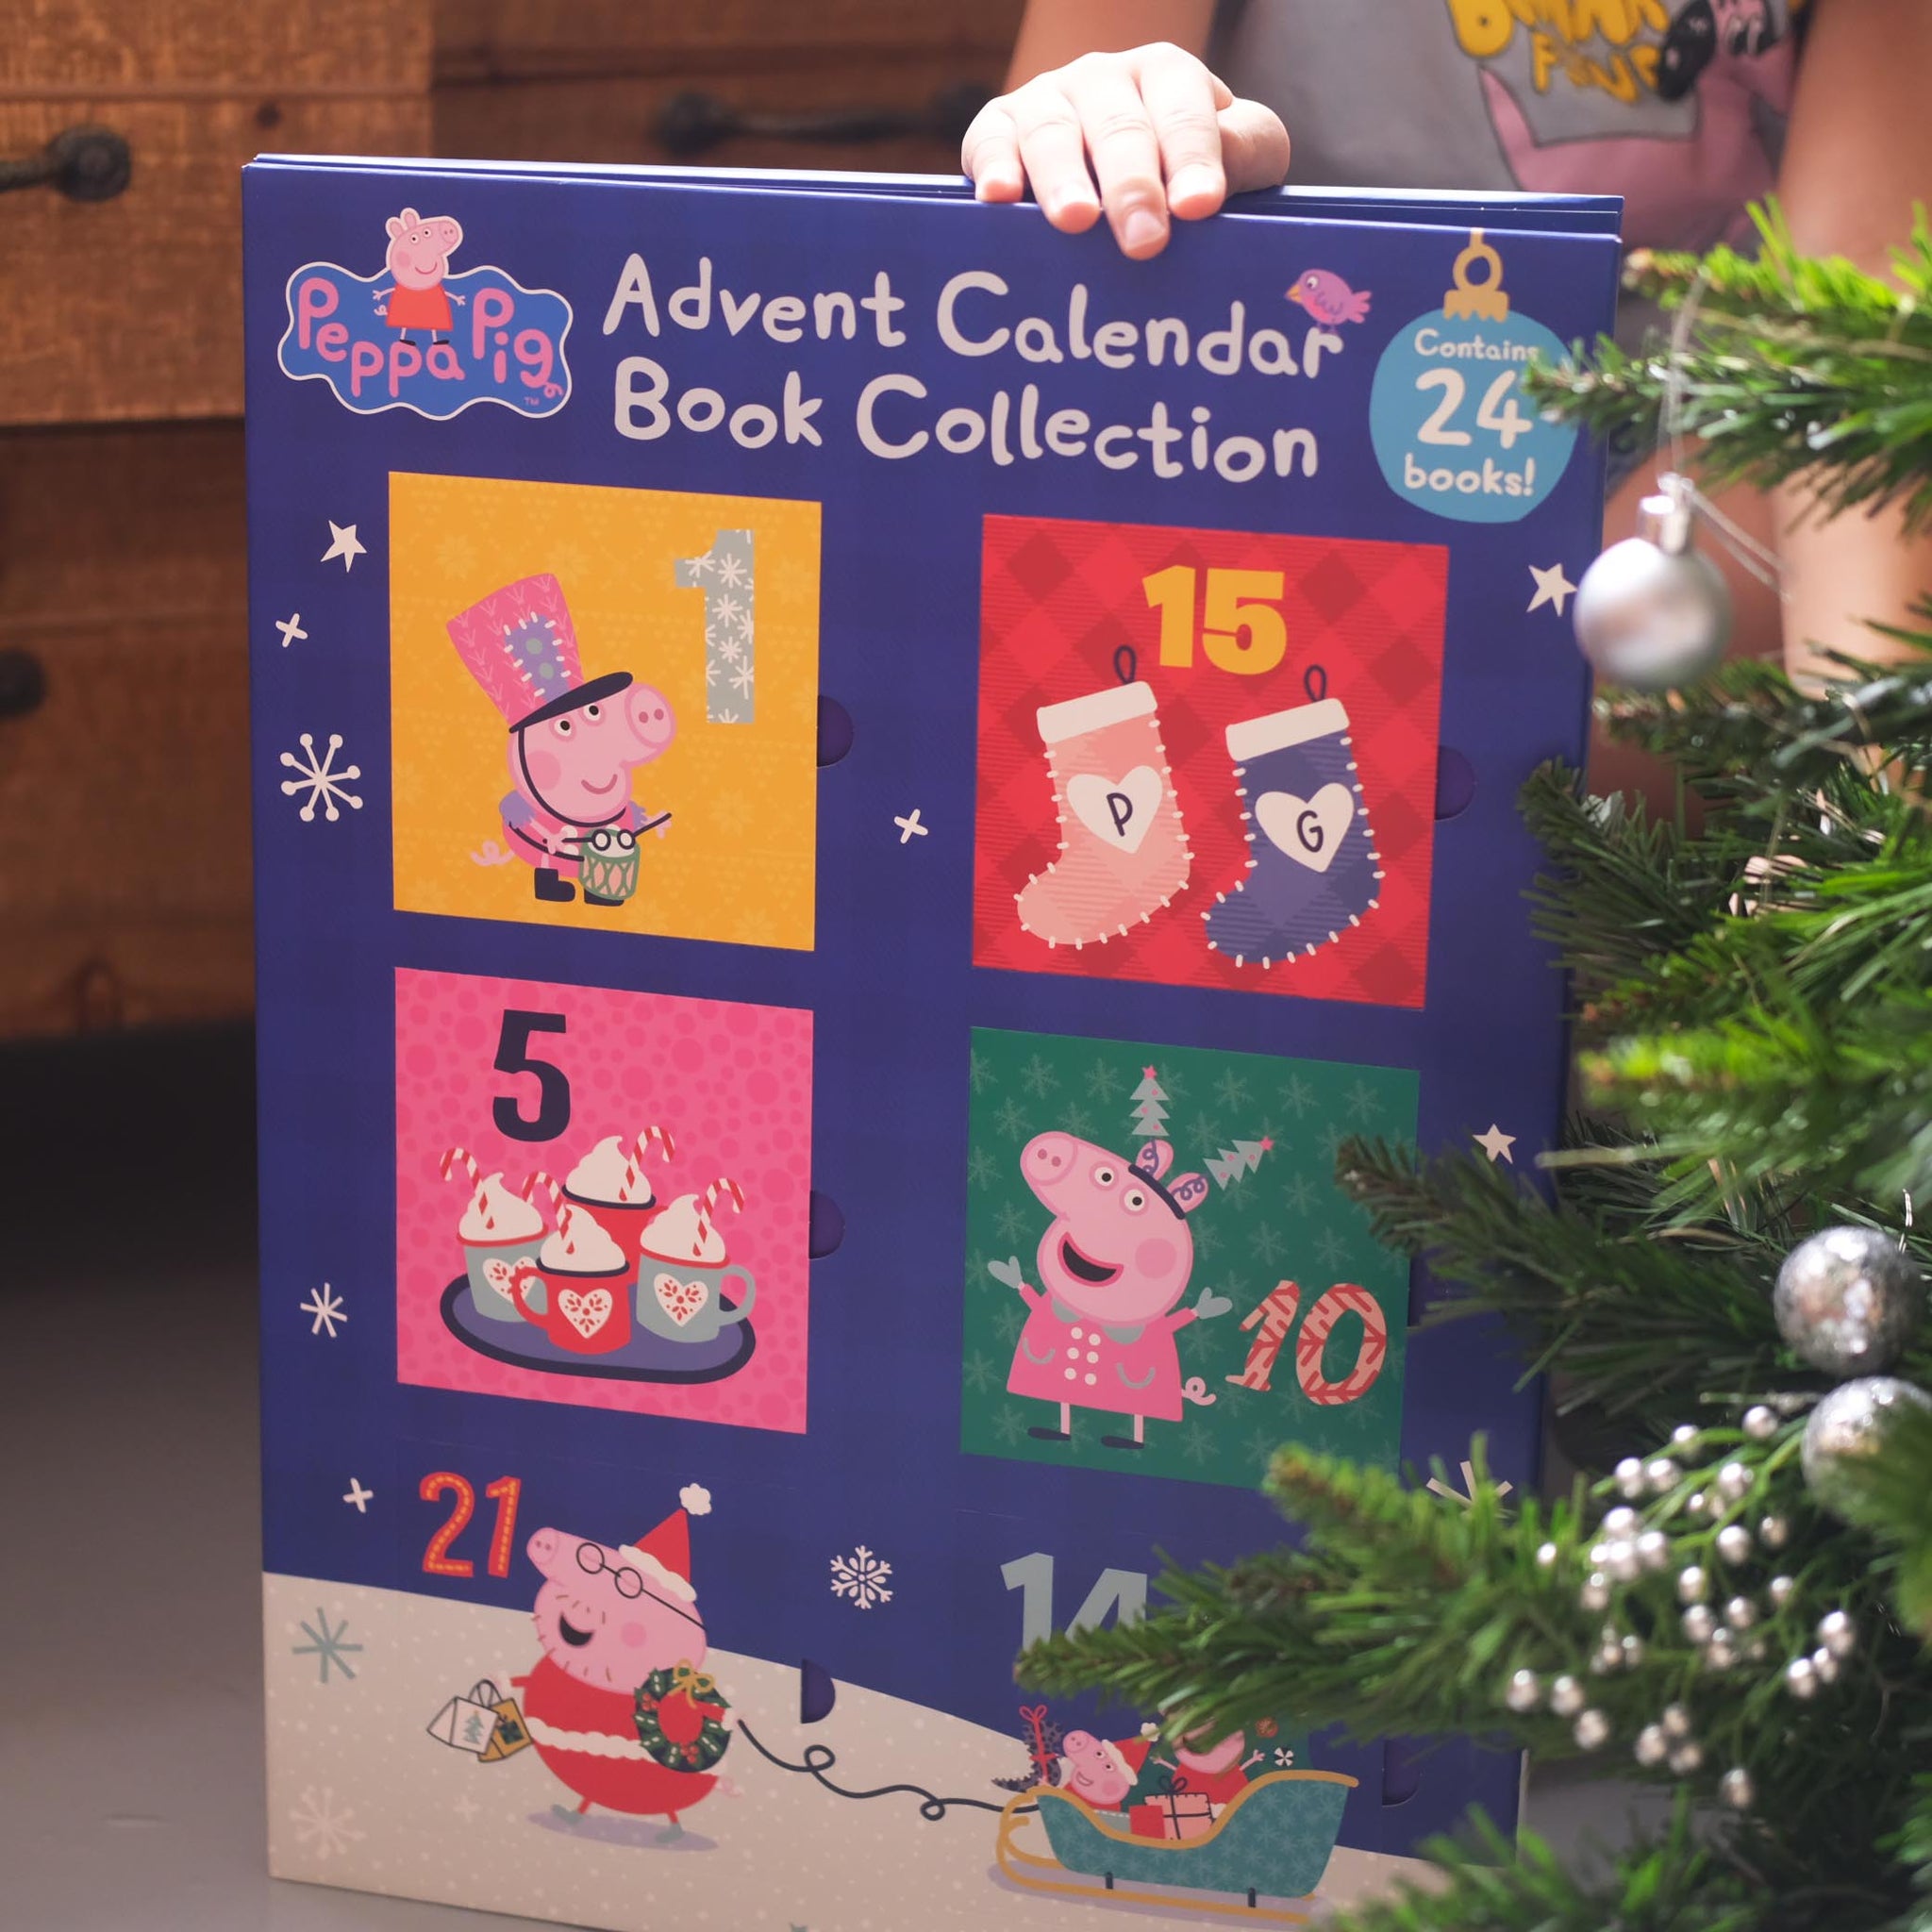 Peppa Pig Advent Calendar Book Collection set